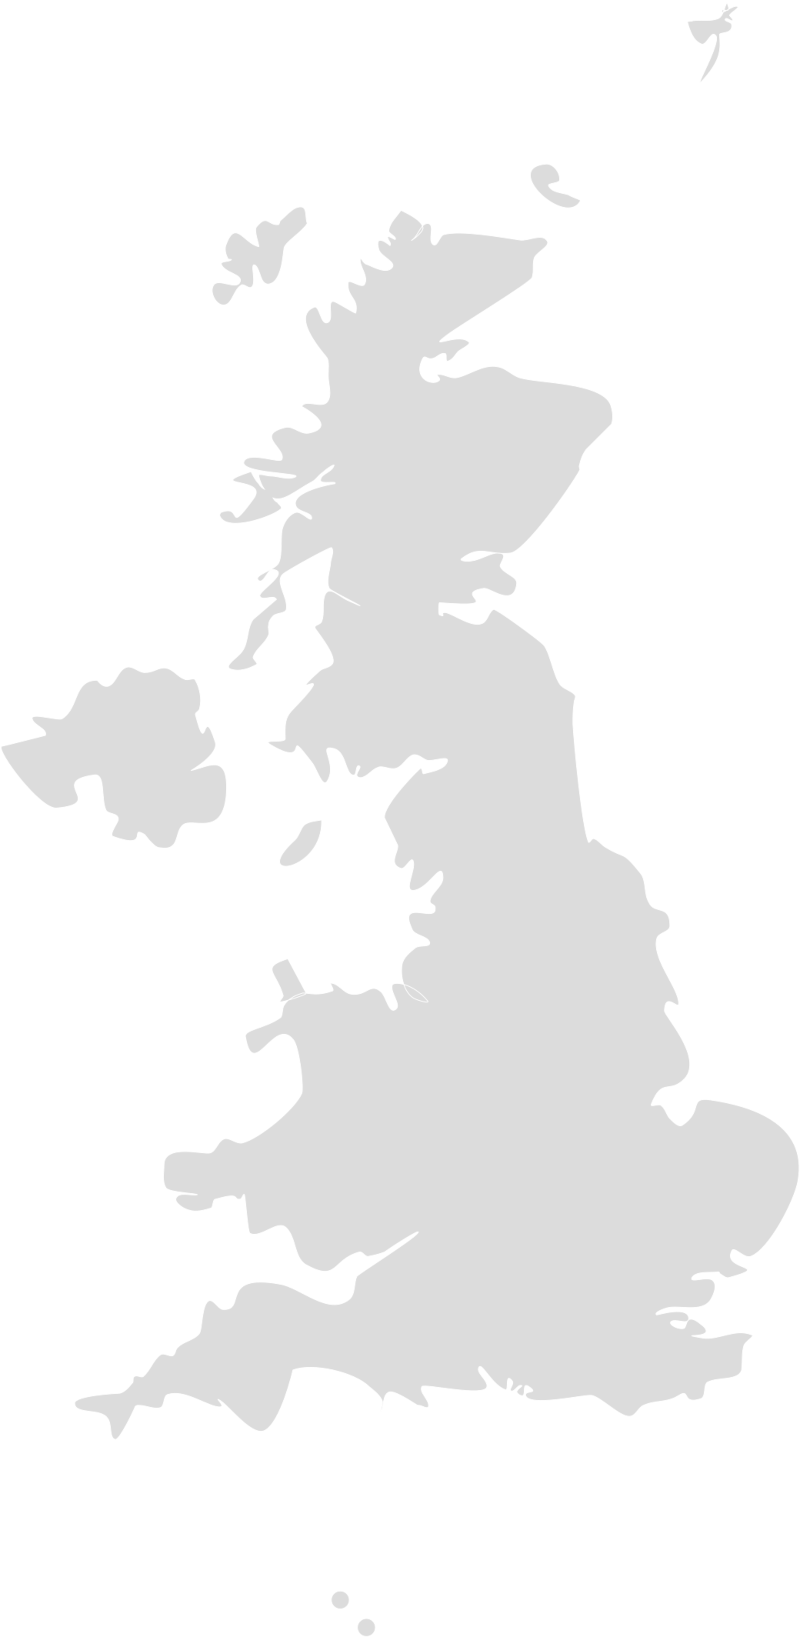 Database of companies registered in United Kingdom